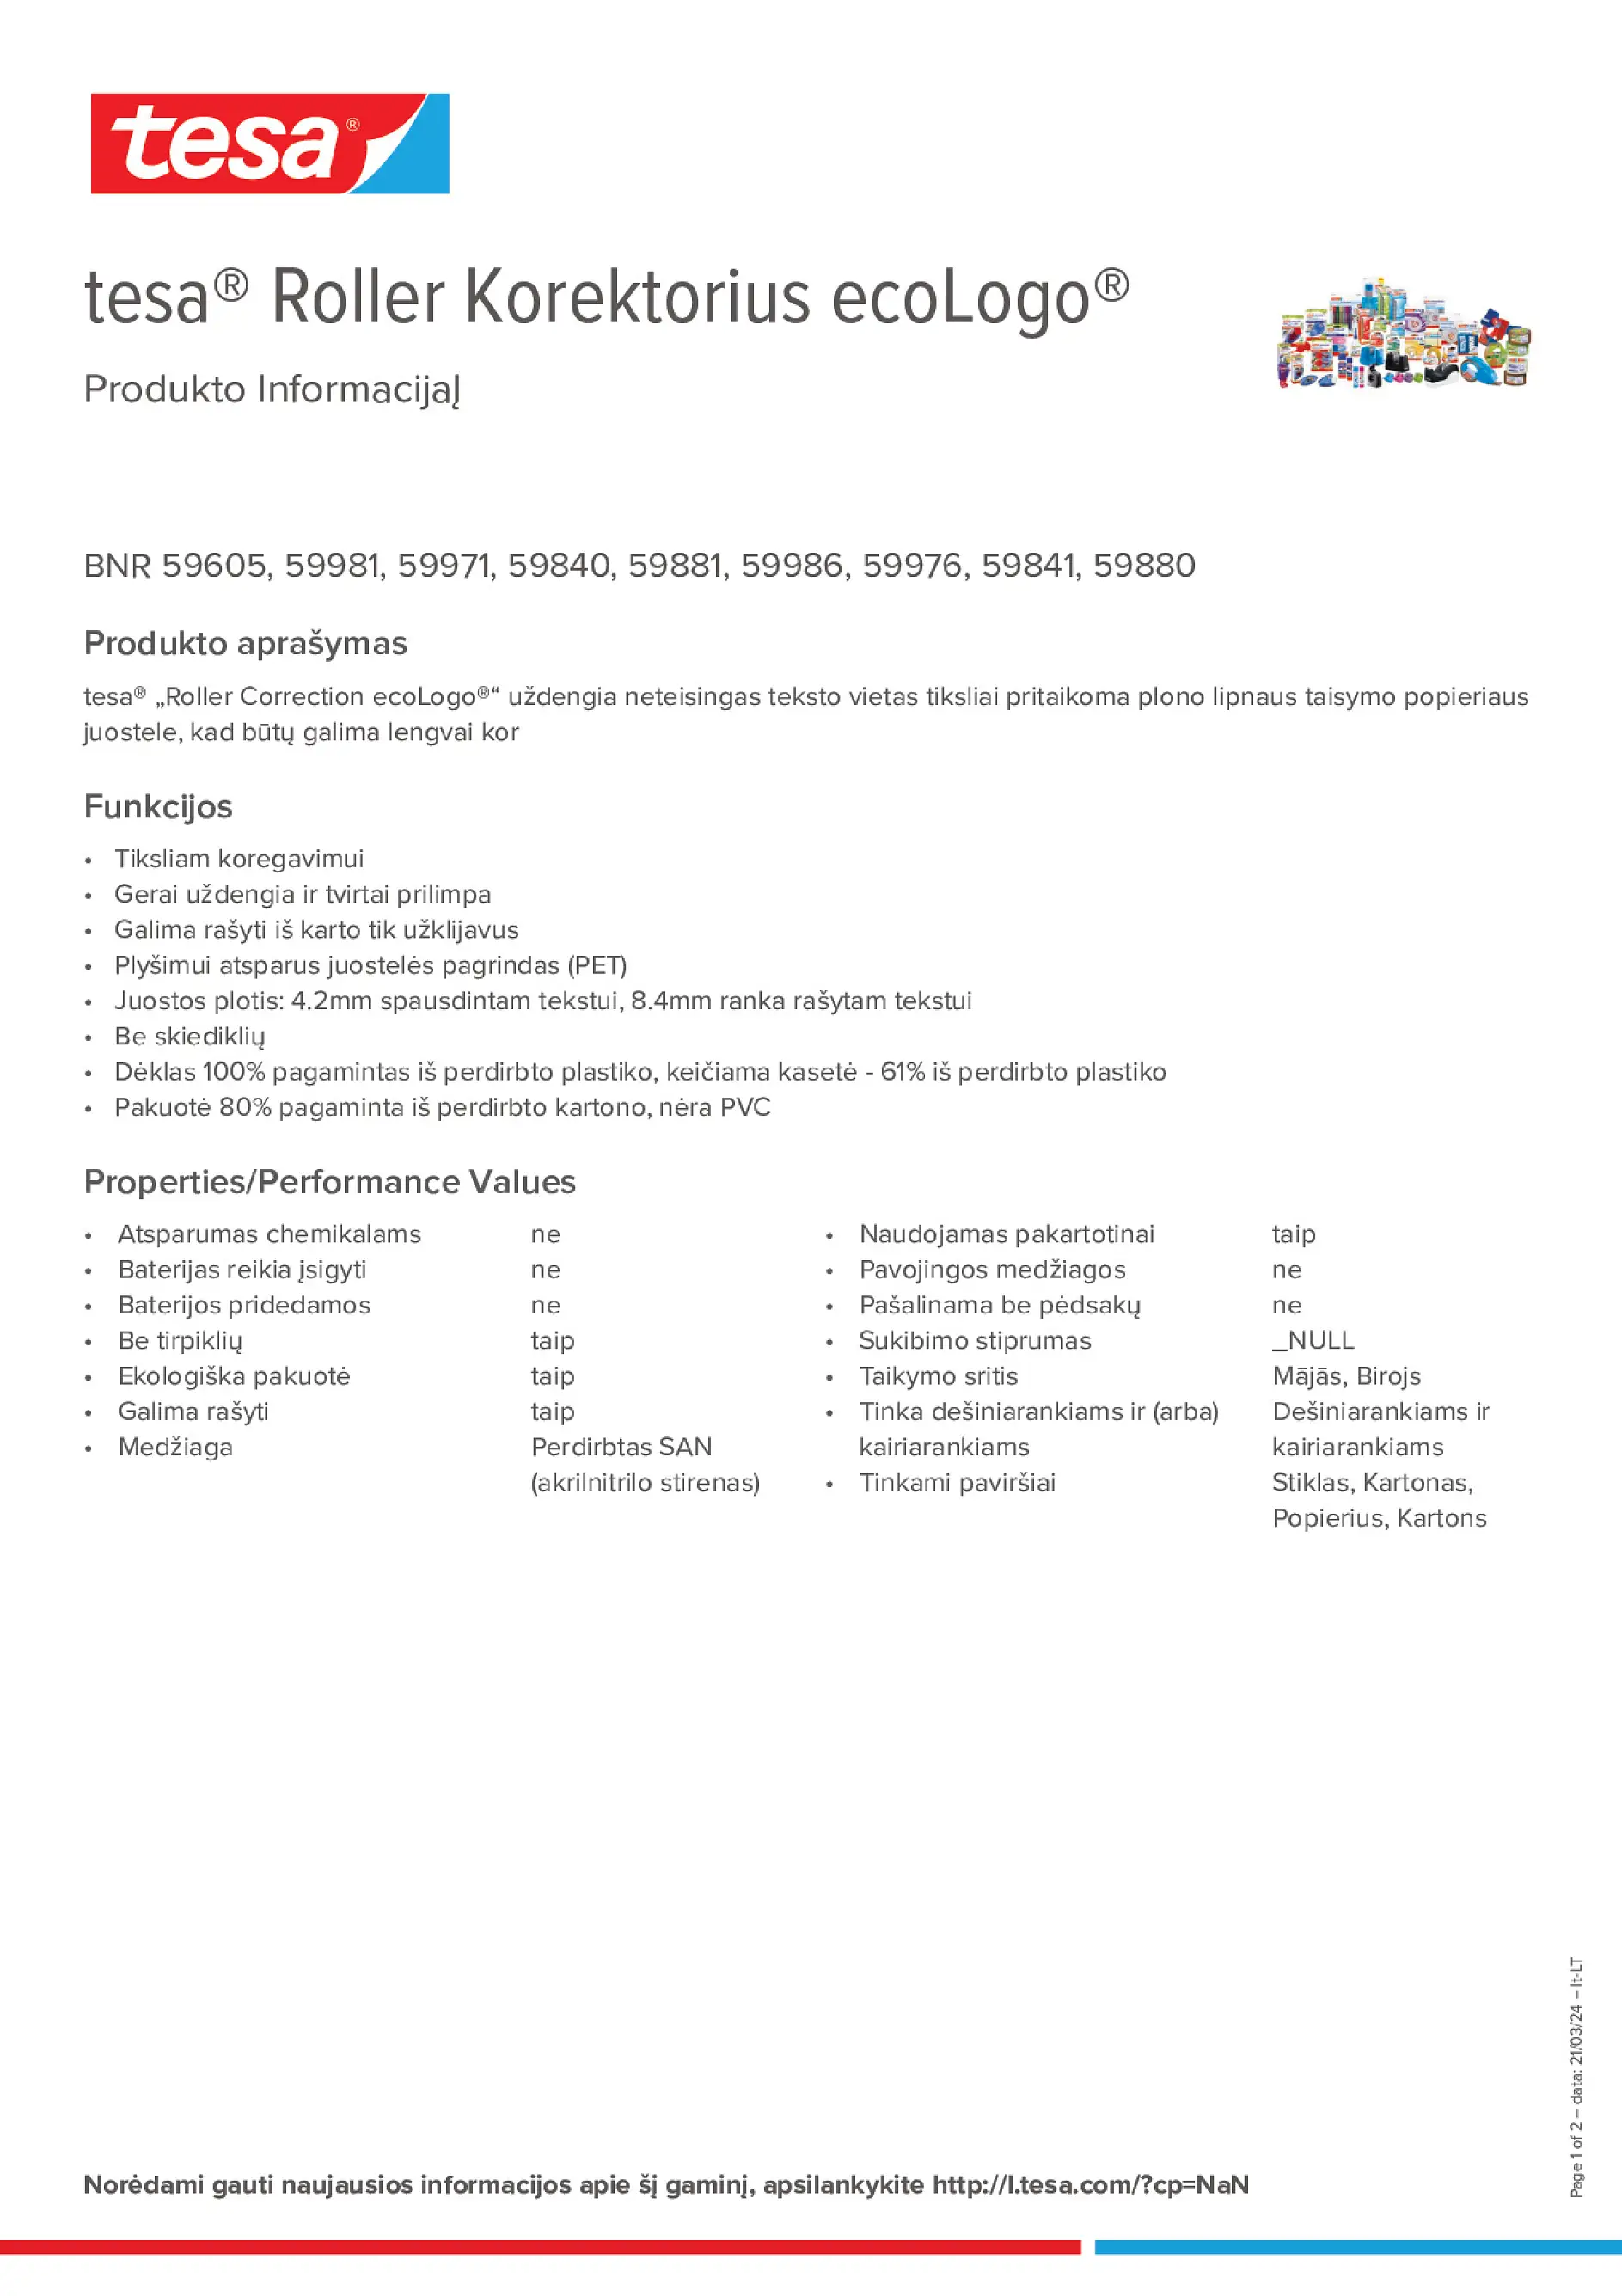 Product information_tesa® 59971_lt-LT